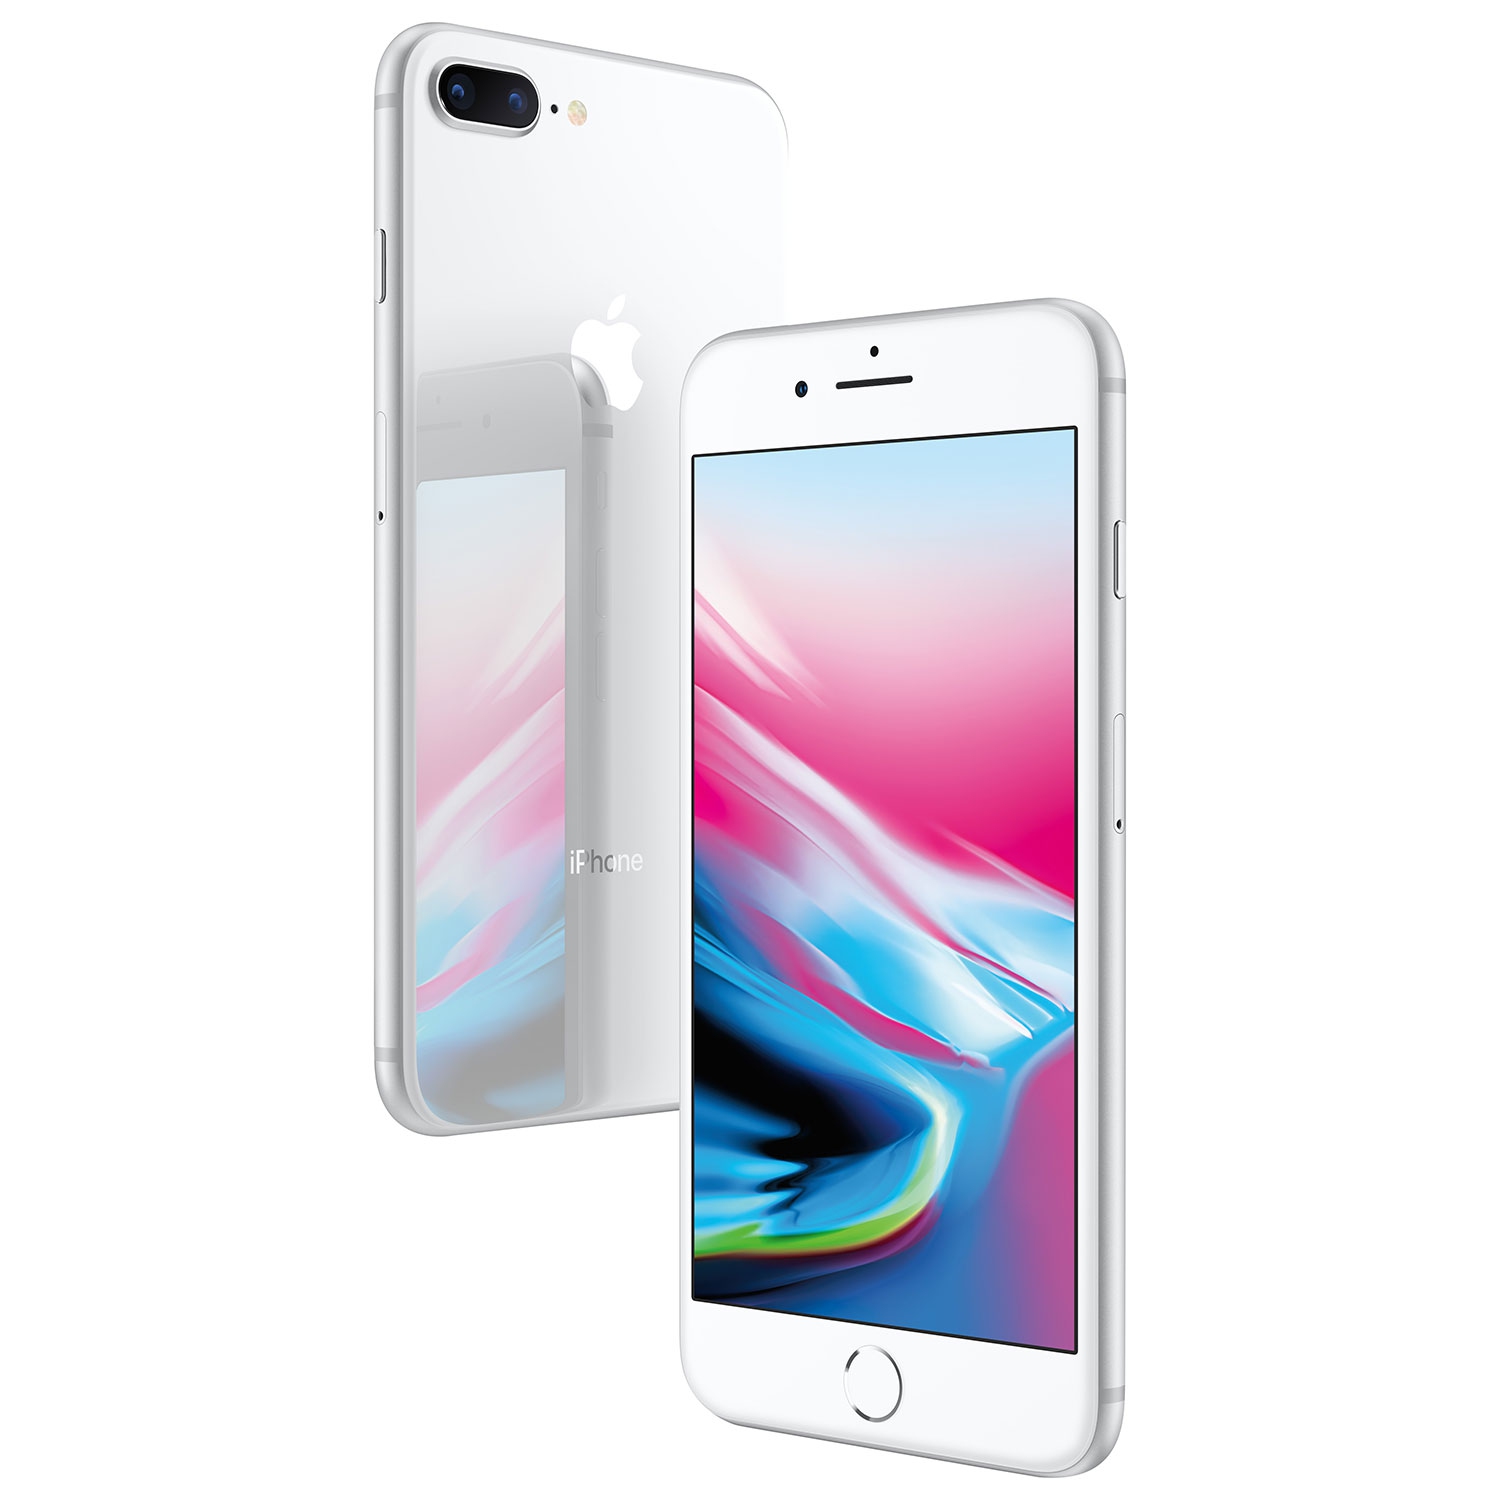 Apple iPhone 8 Plus 64GB Smartphone - Silver - Unlocked - Open Box